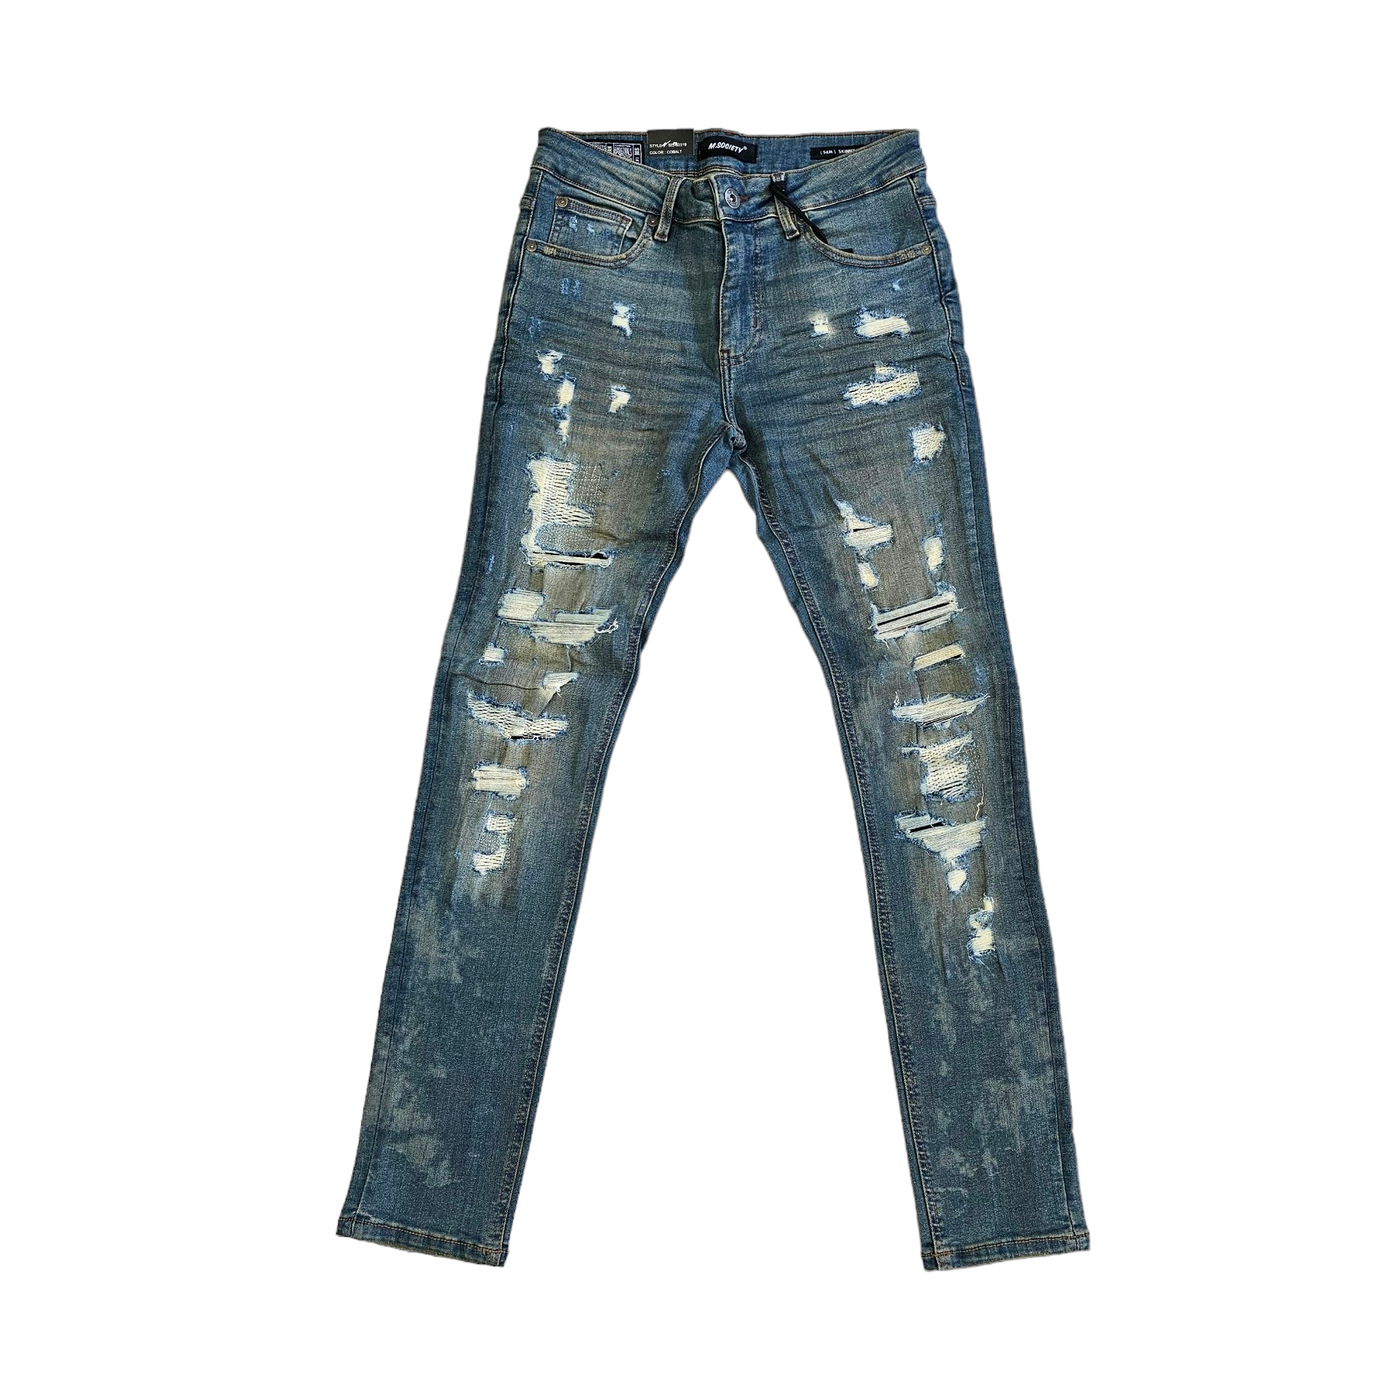 M. Society Men's Skinny Fit Jeans Cobalt 80319